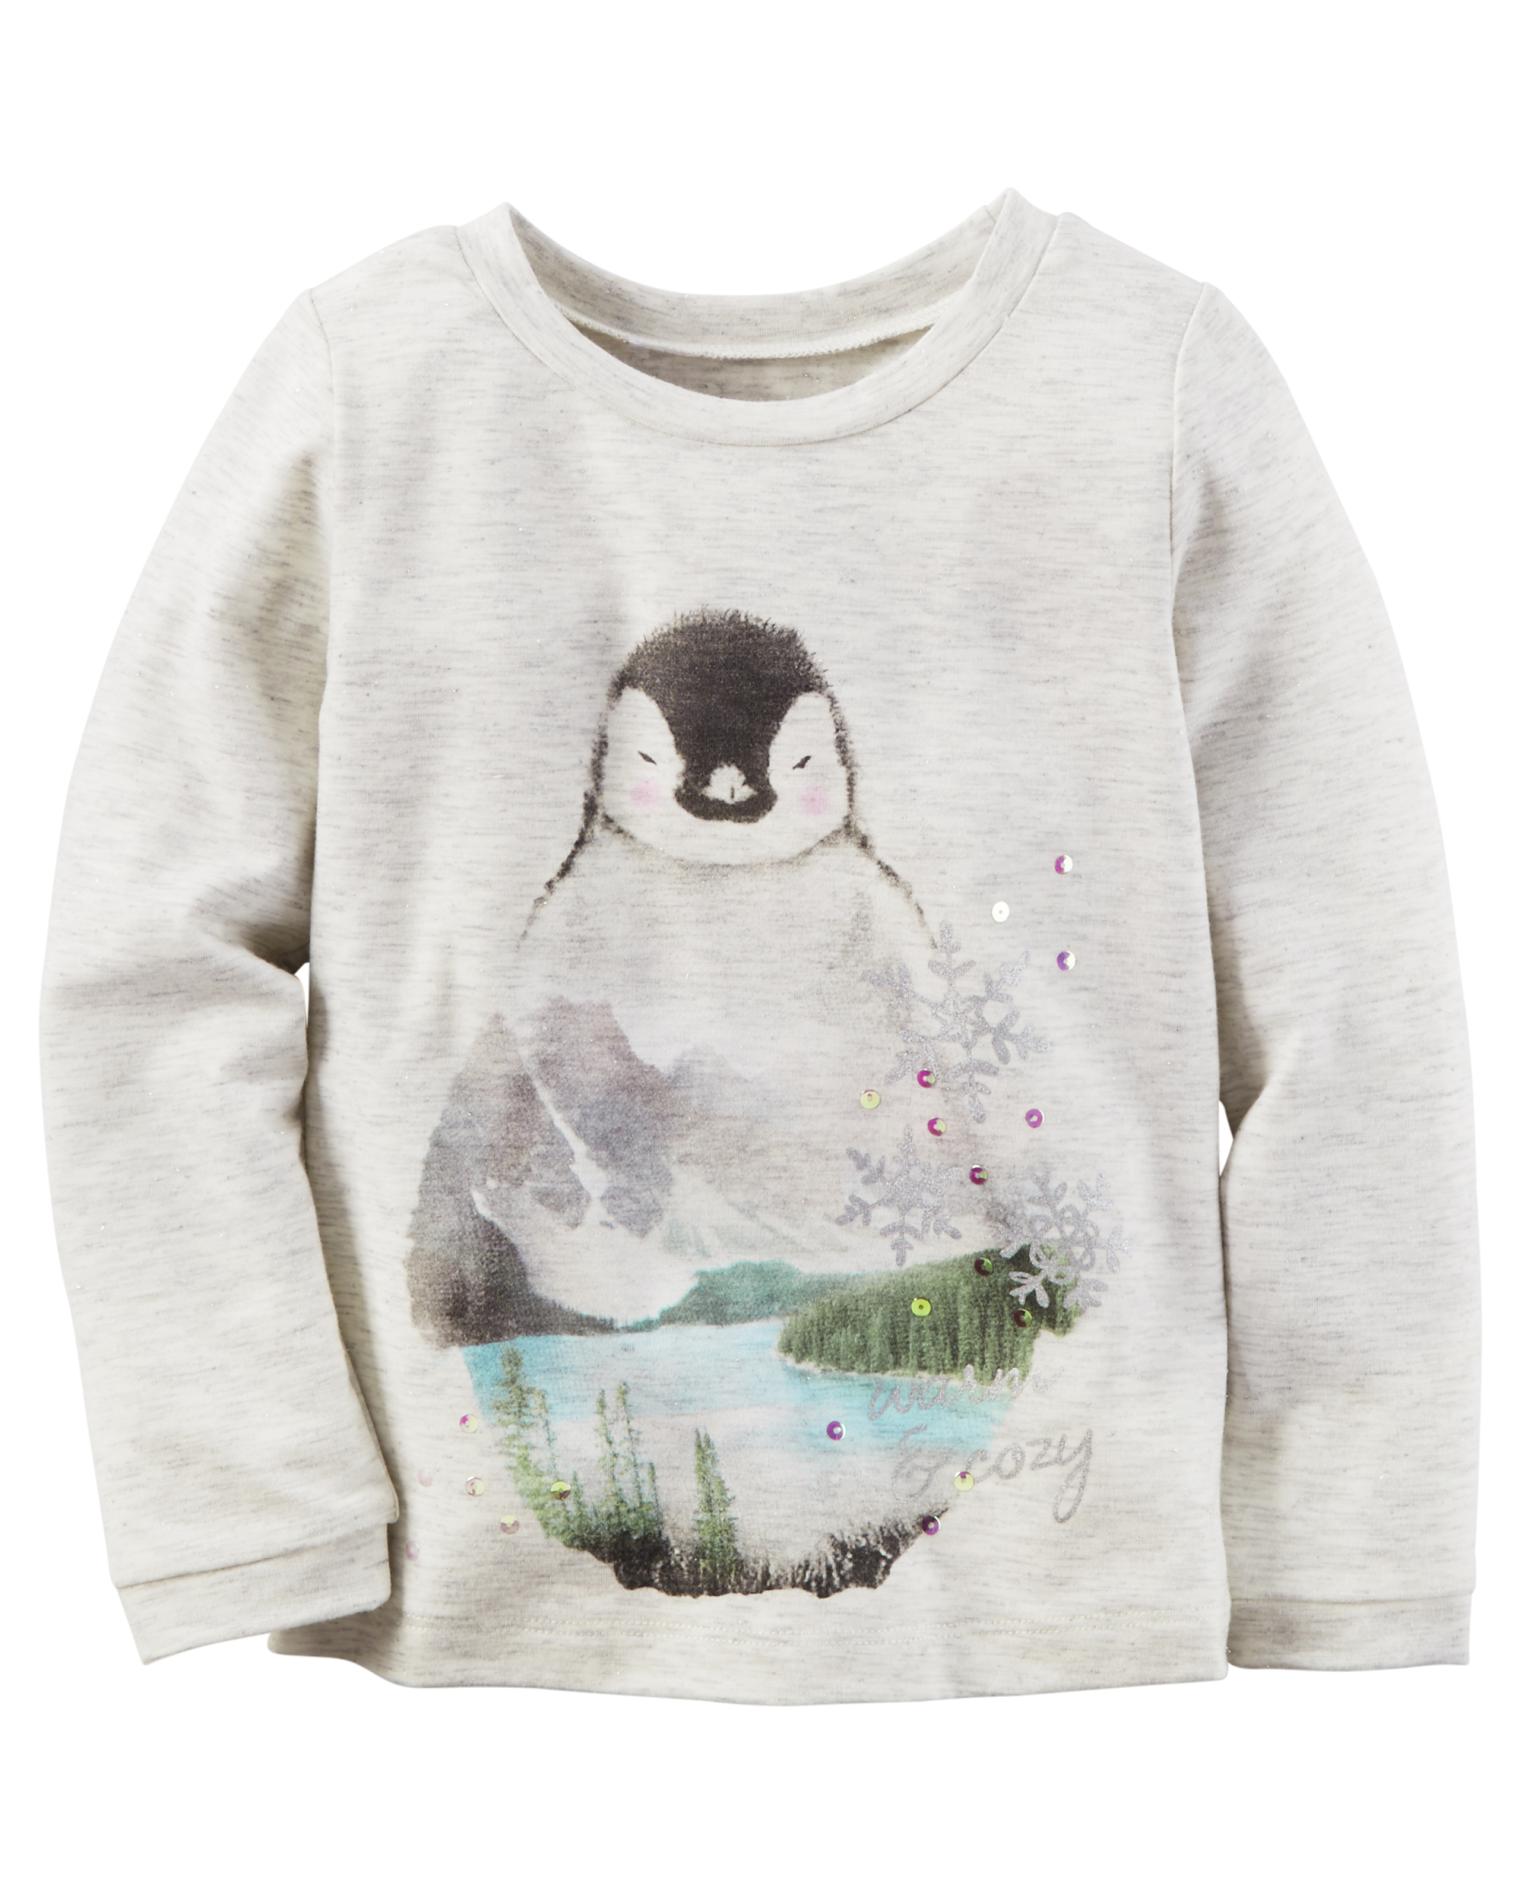 Carter's Girls' Long-Sleeve Graphic T-Shirt - Penguin